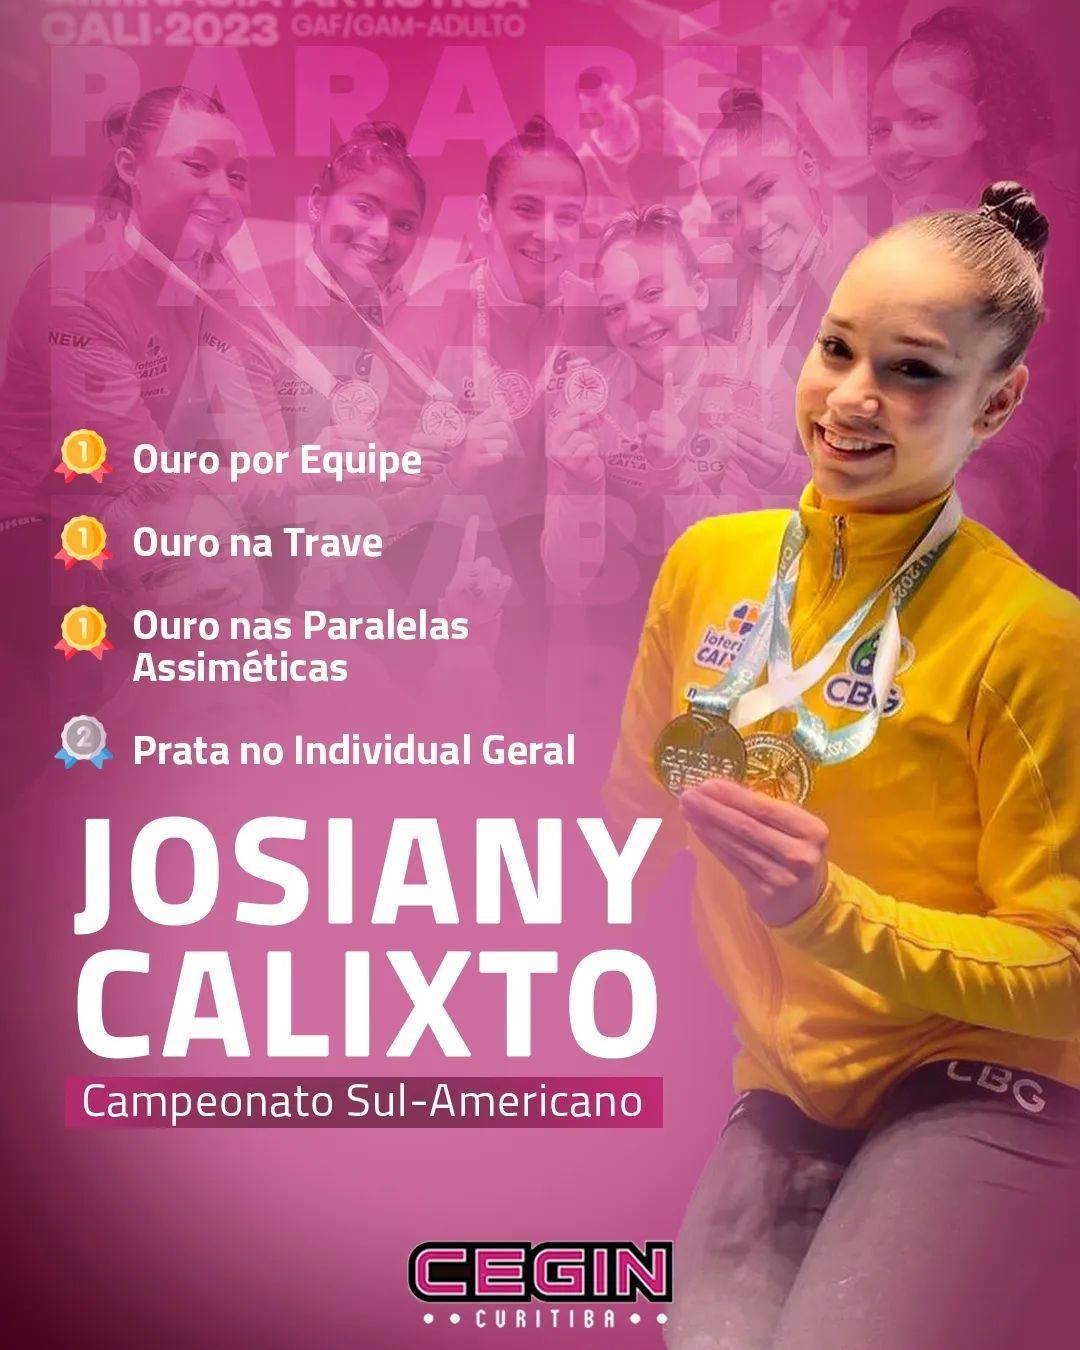 Josiany Calixto conquista 4 medalhas no Campeonato Sul-Americano